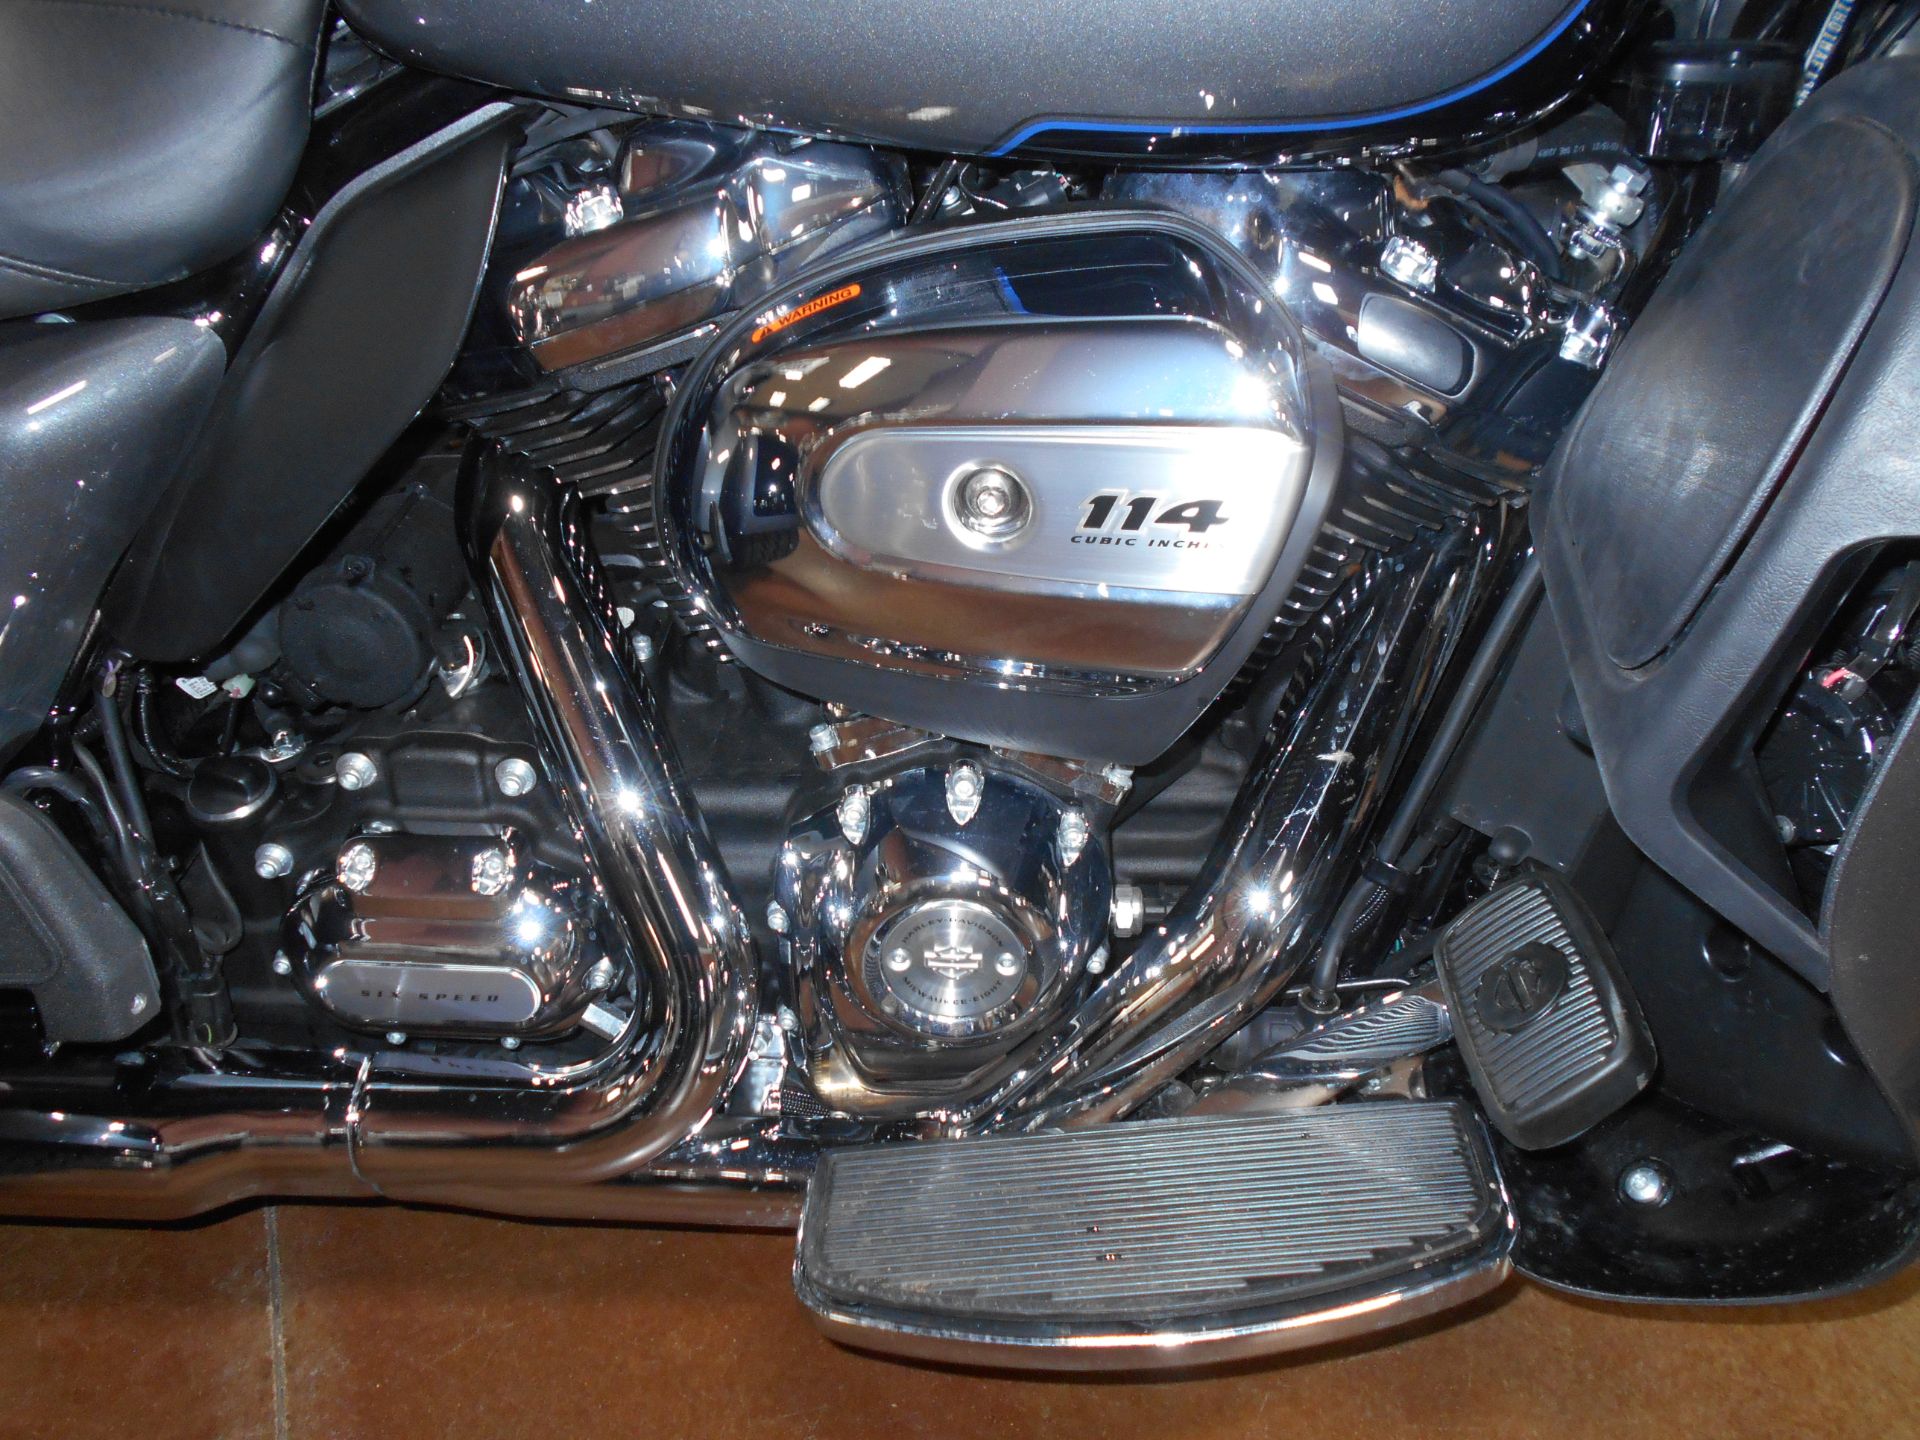 2022 Harley-Davidson Tri Glide® Ultra in Mauston, Wisconsin - Photo 5